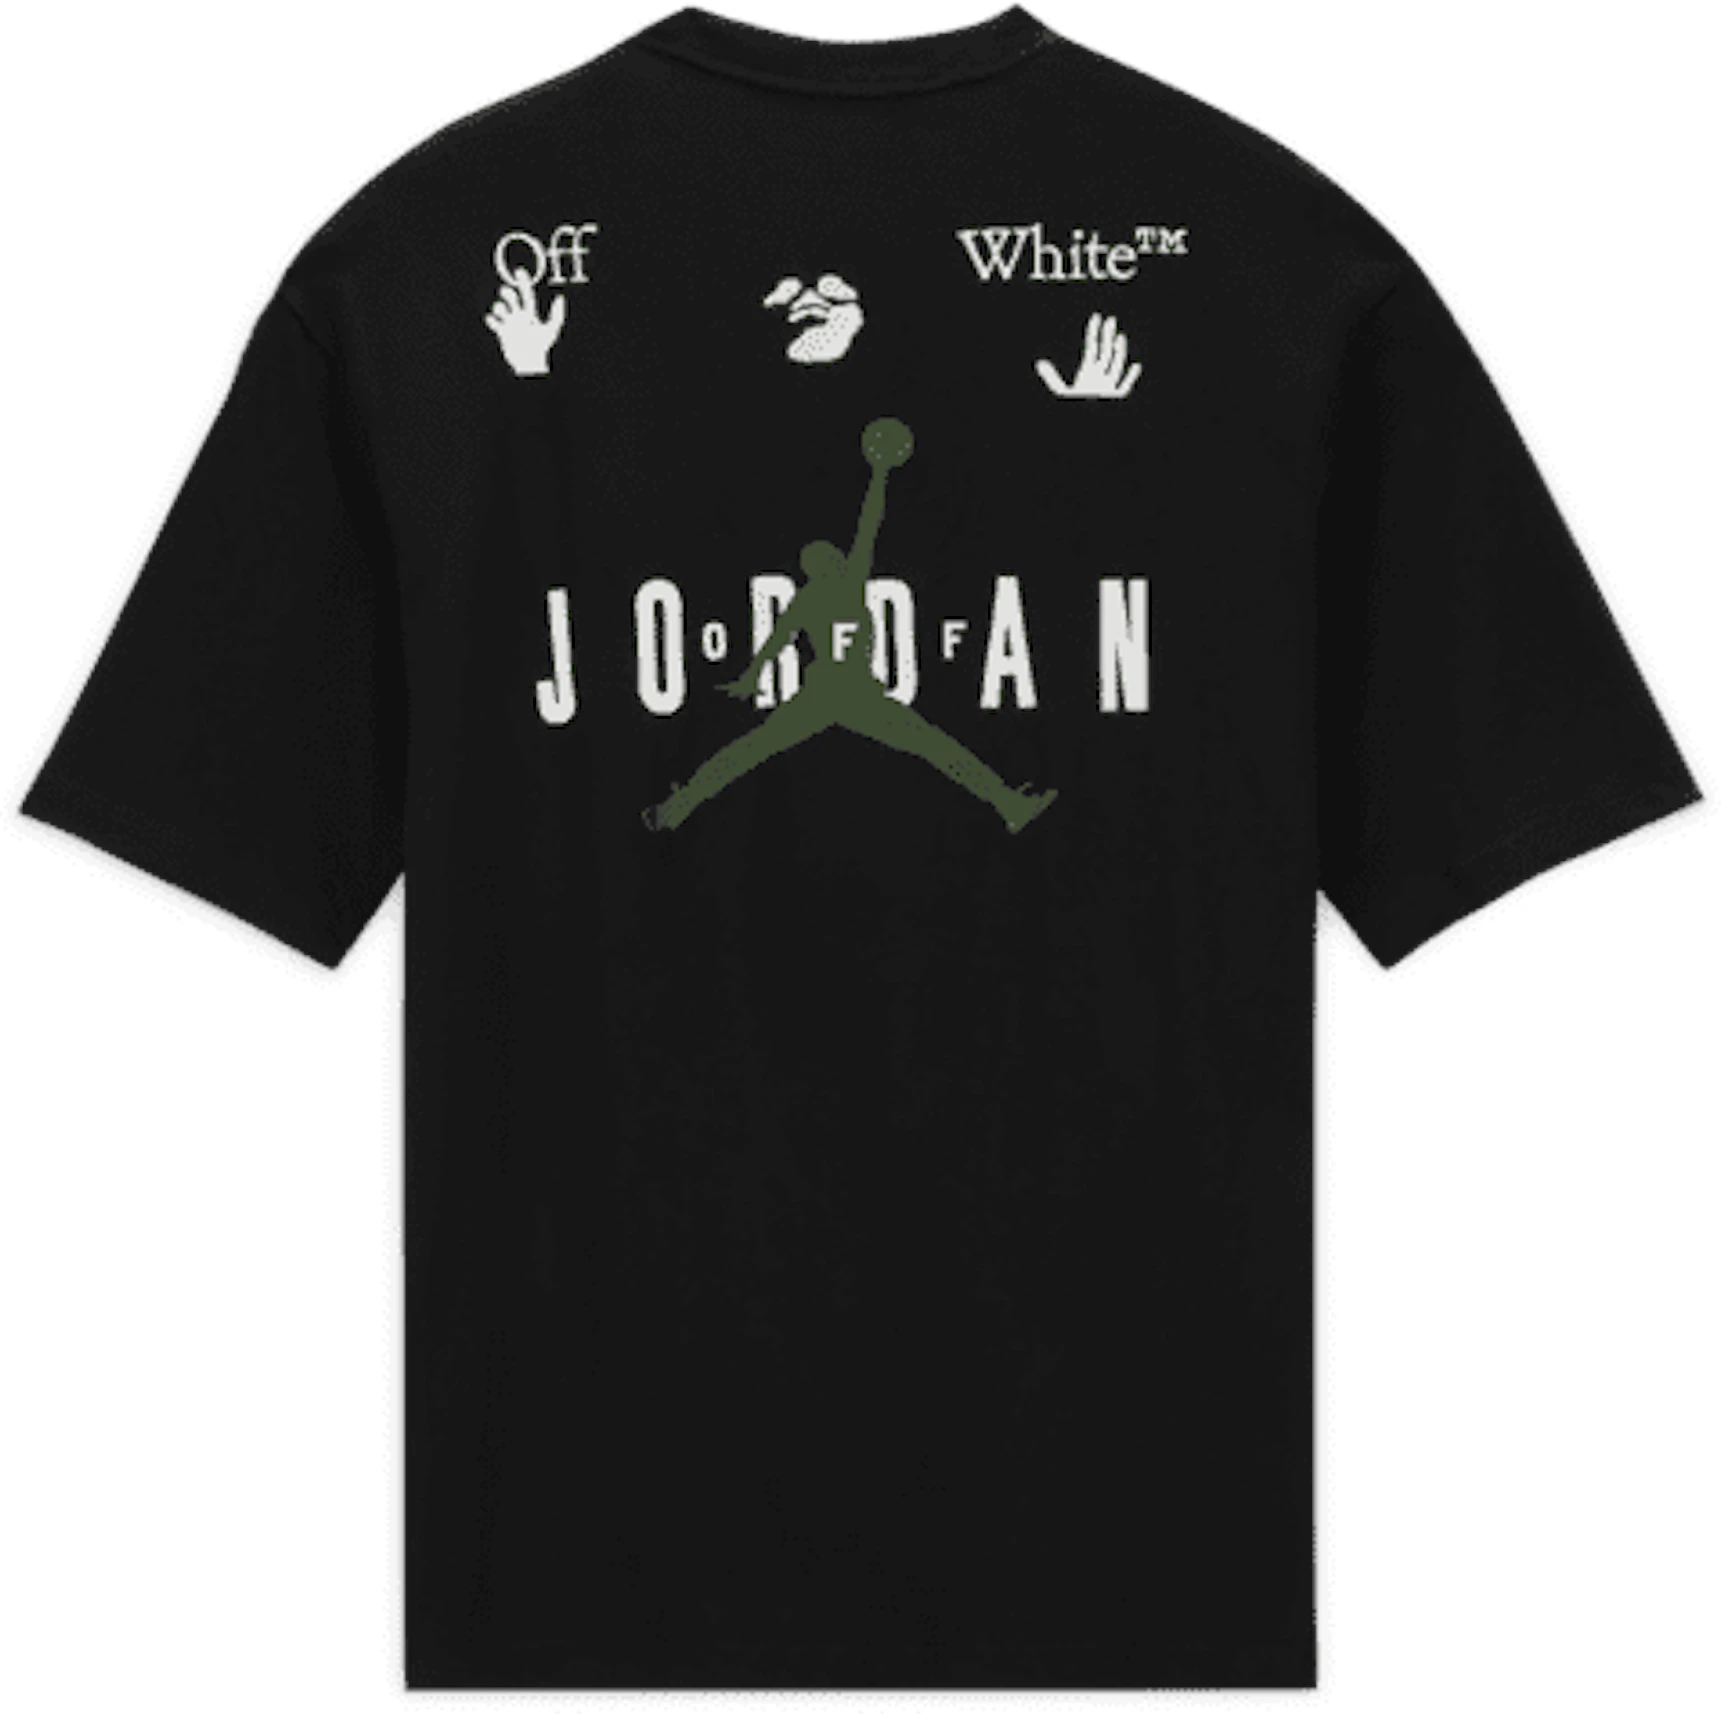 Off-White x Jordan T-shirt Black - ES